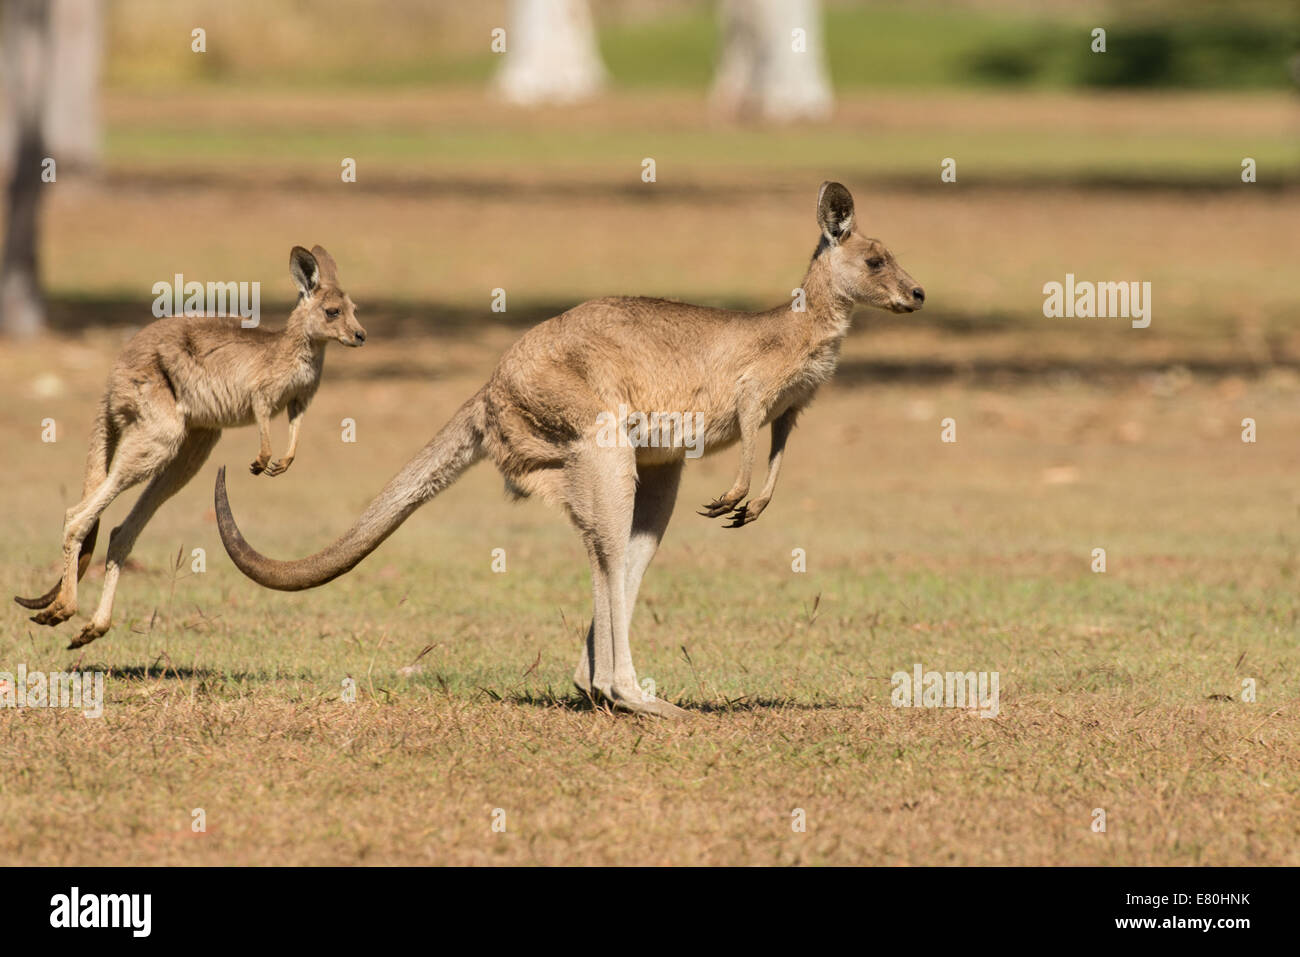 Stock photo of an eastern grey kangaroo hopping, Queensland, Australia. Stock Photo